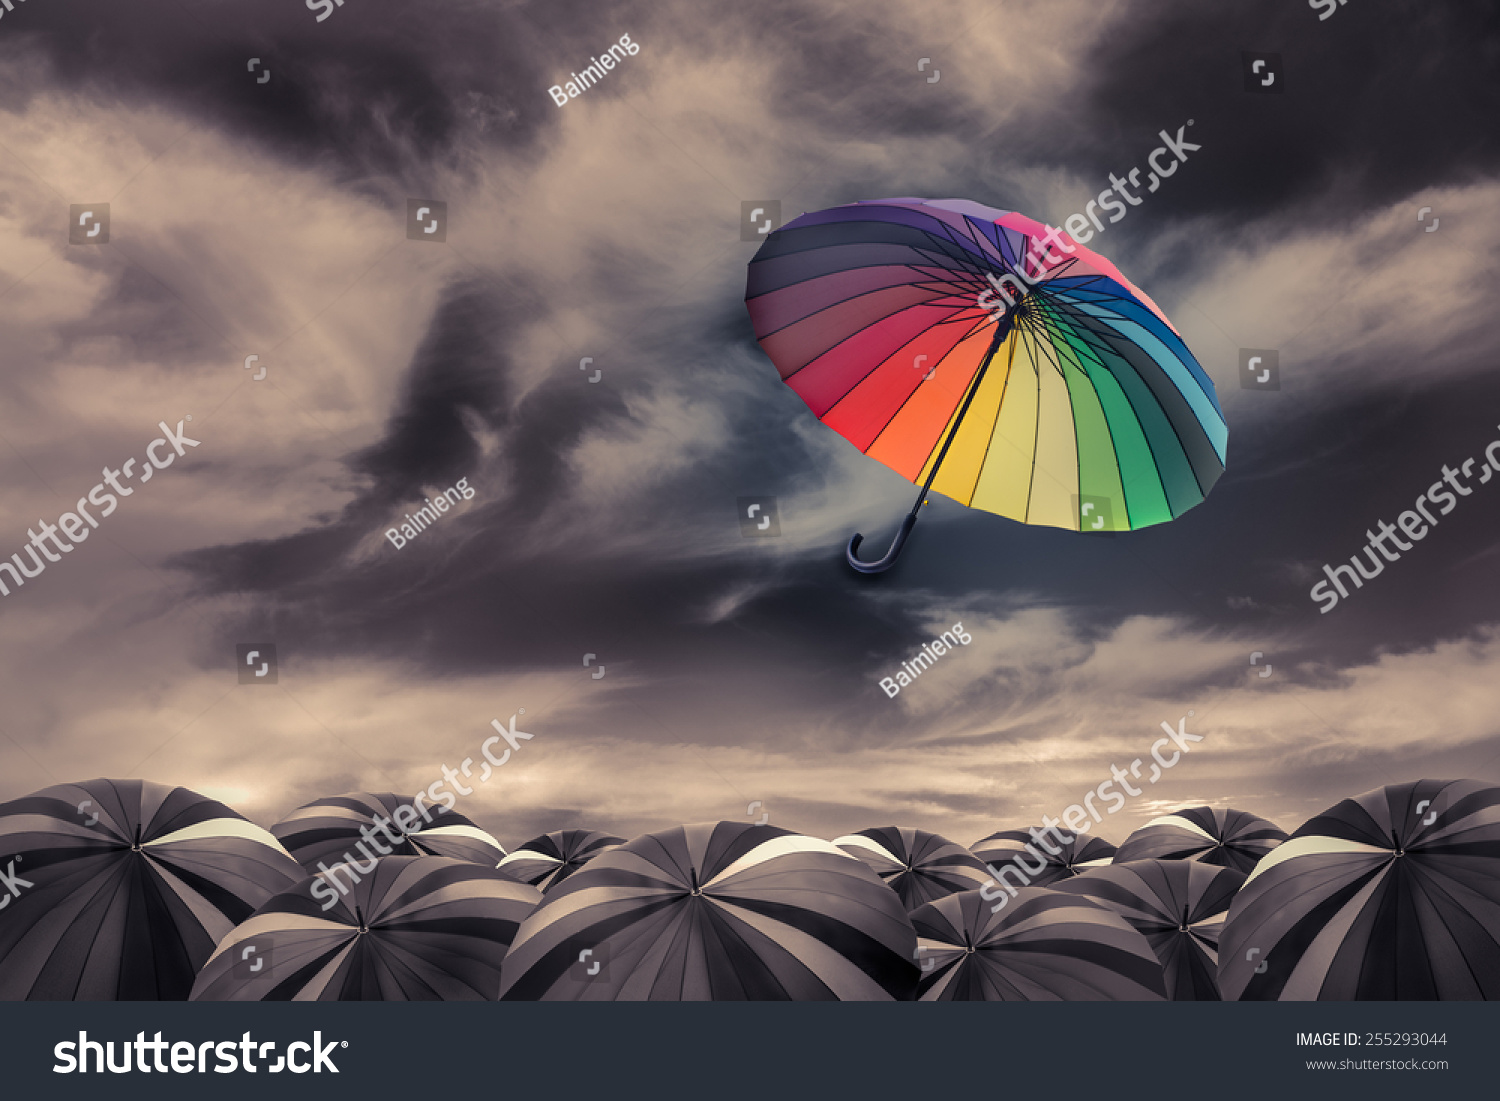 rainbow umbrella fly out the mass of black umbrellas #255293044